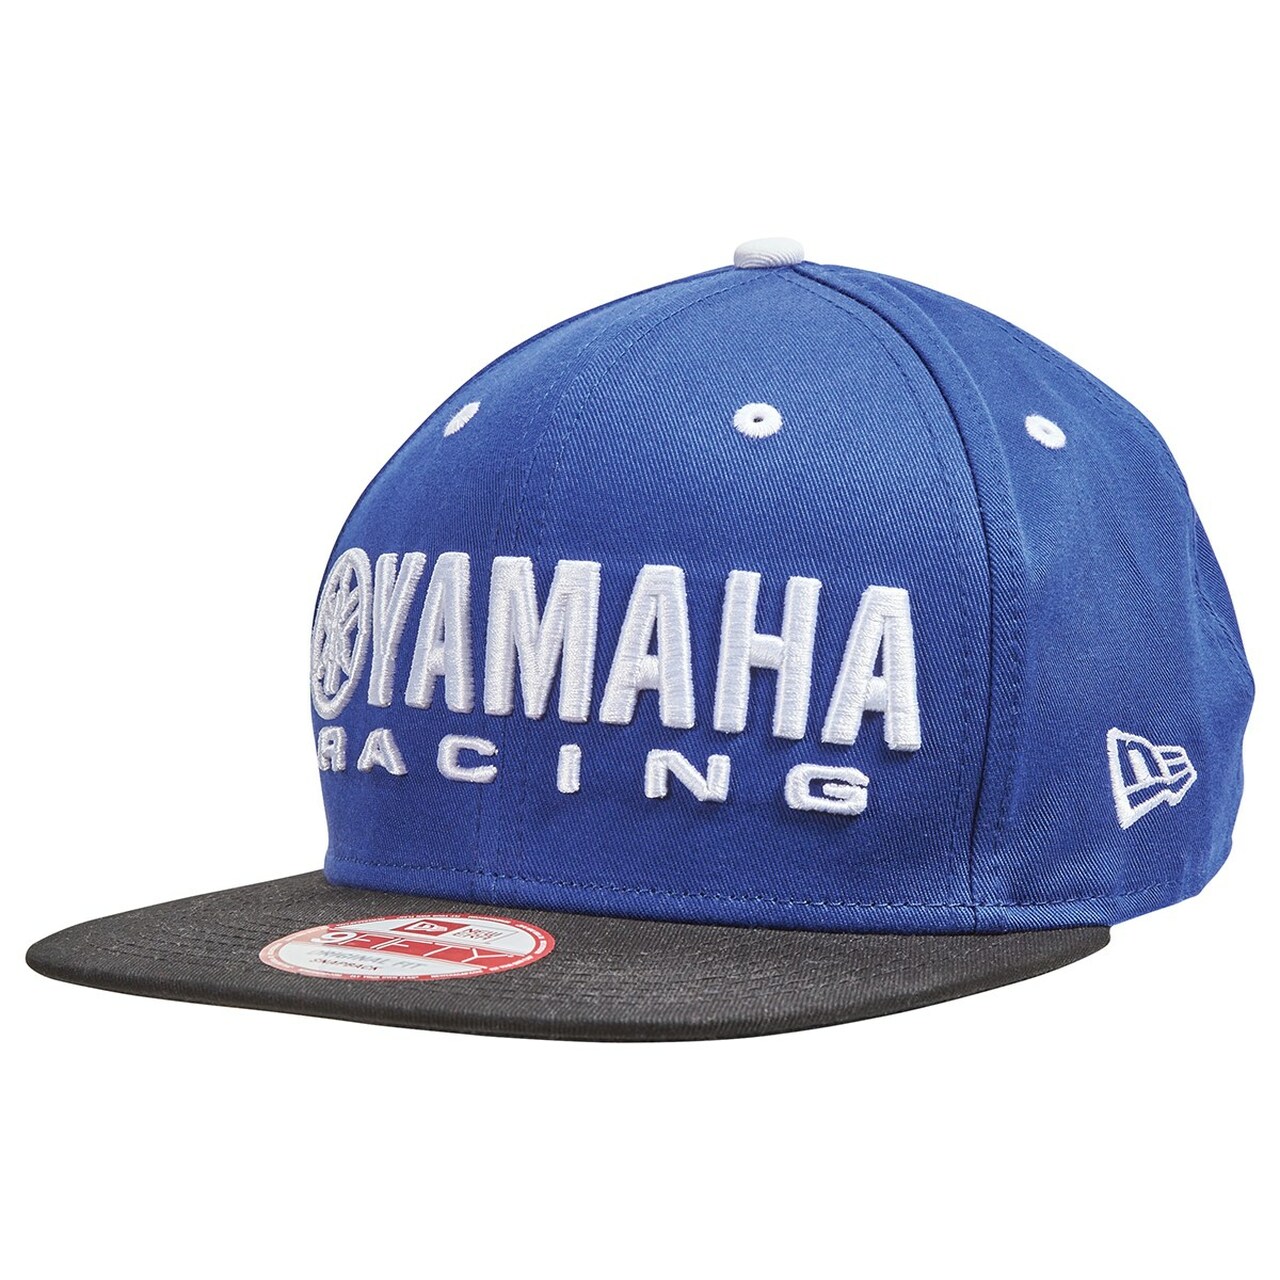 2021 Yamaha Racing New Era Flatbill Hat (Blue)